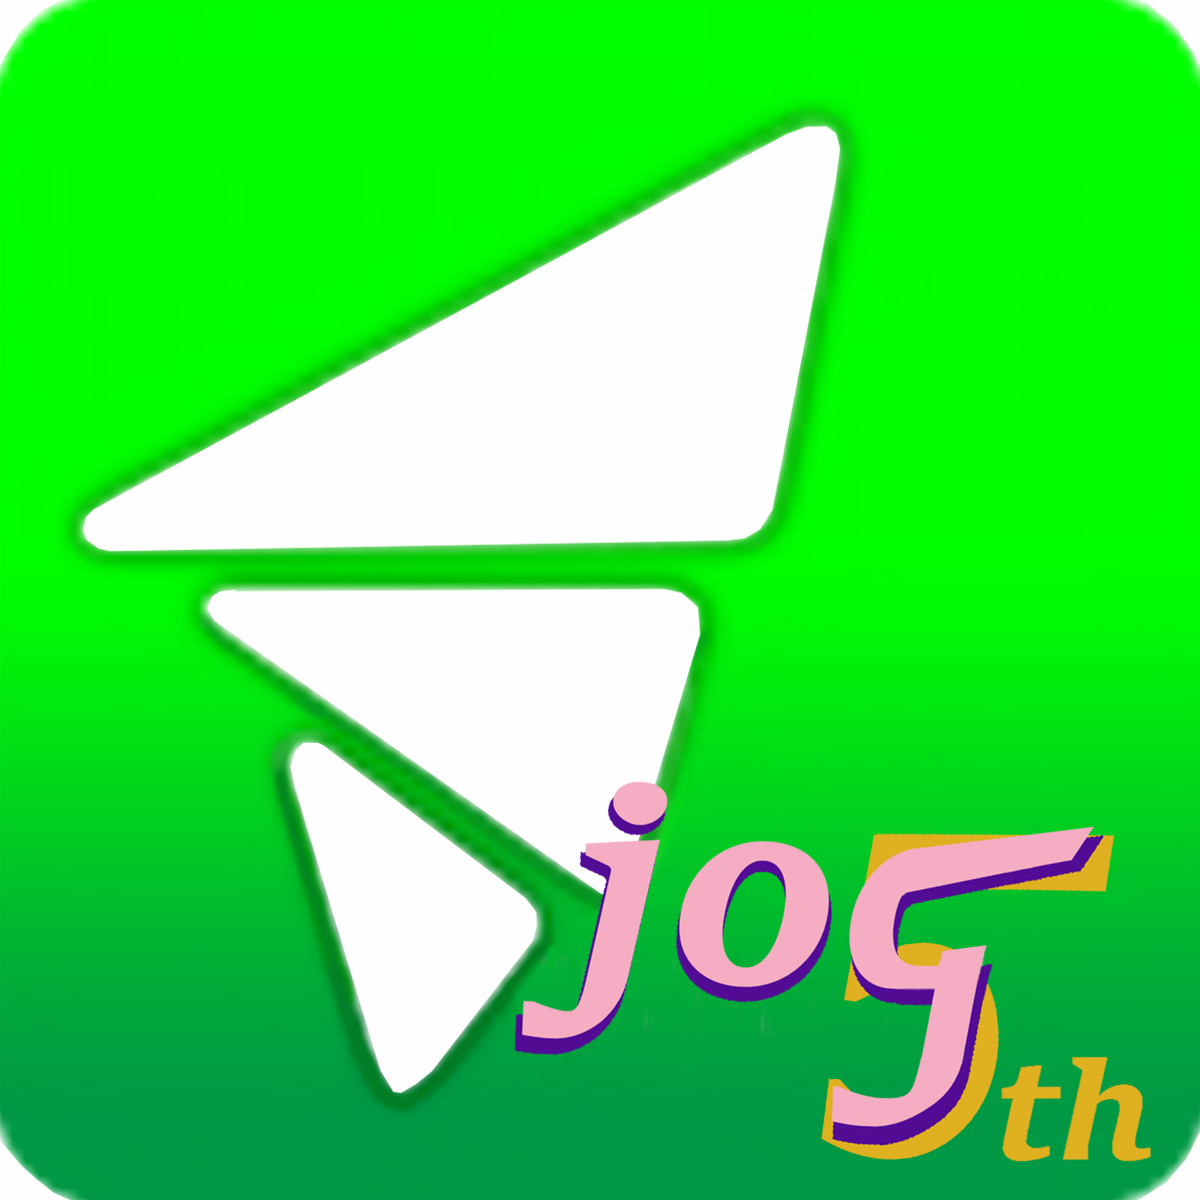 添付 JOG 5th icon.jpg